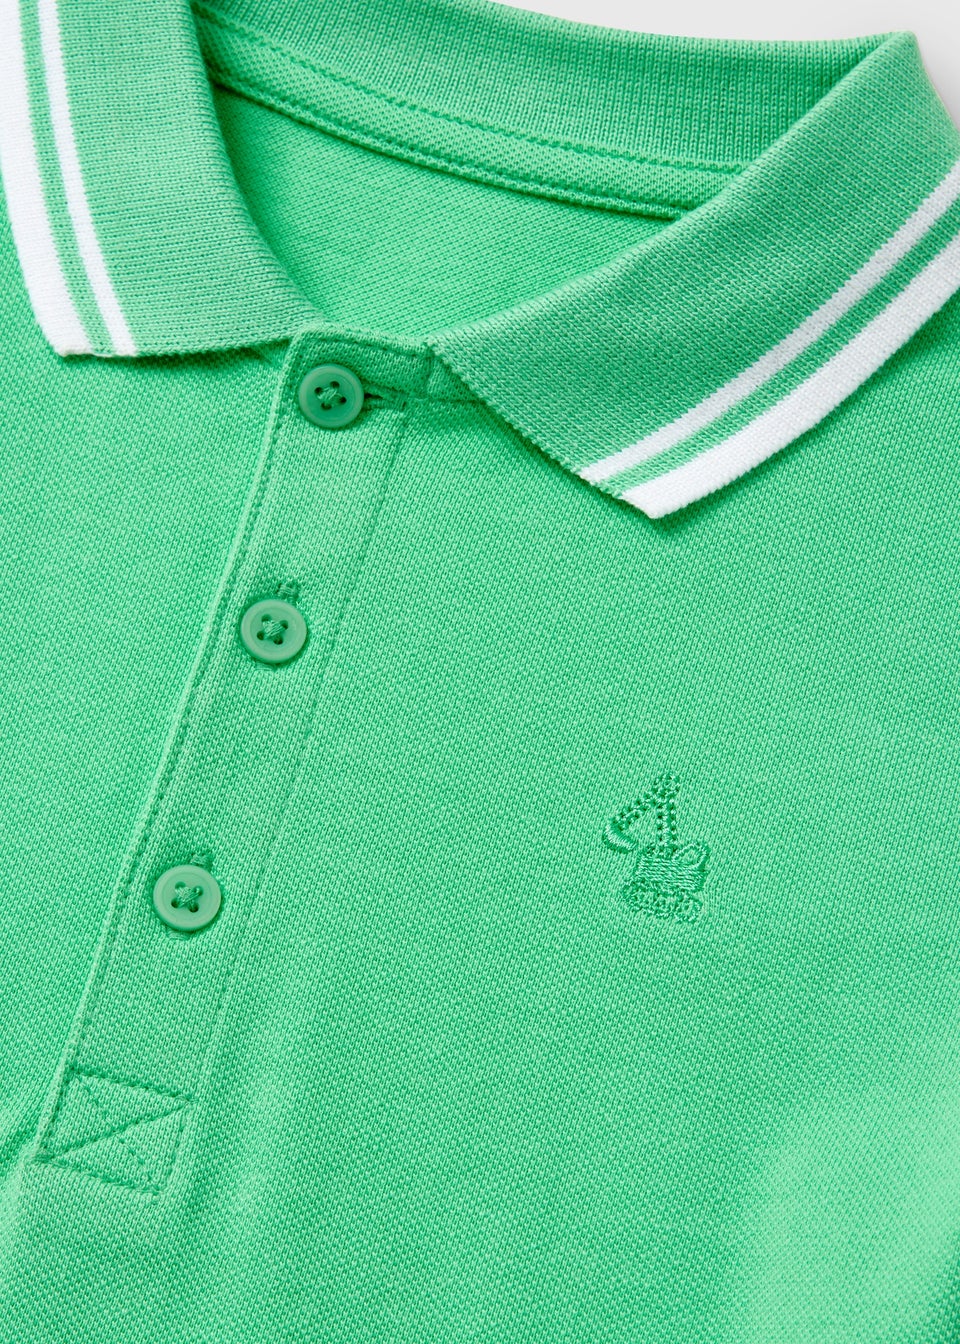 Boys Green Casual Polo Shirt (1-7yrs)